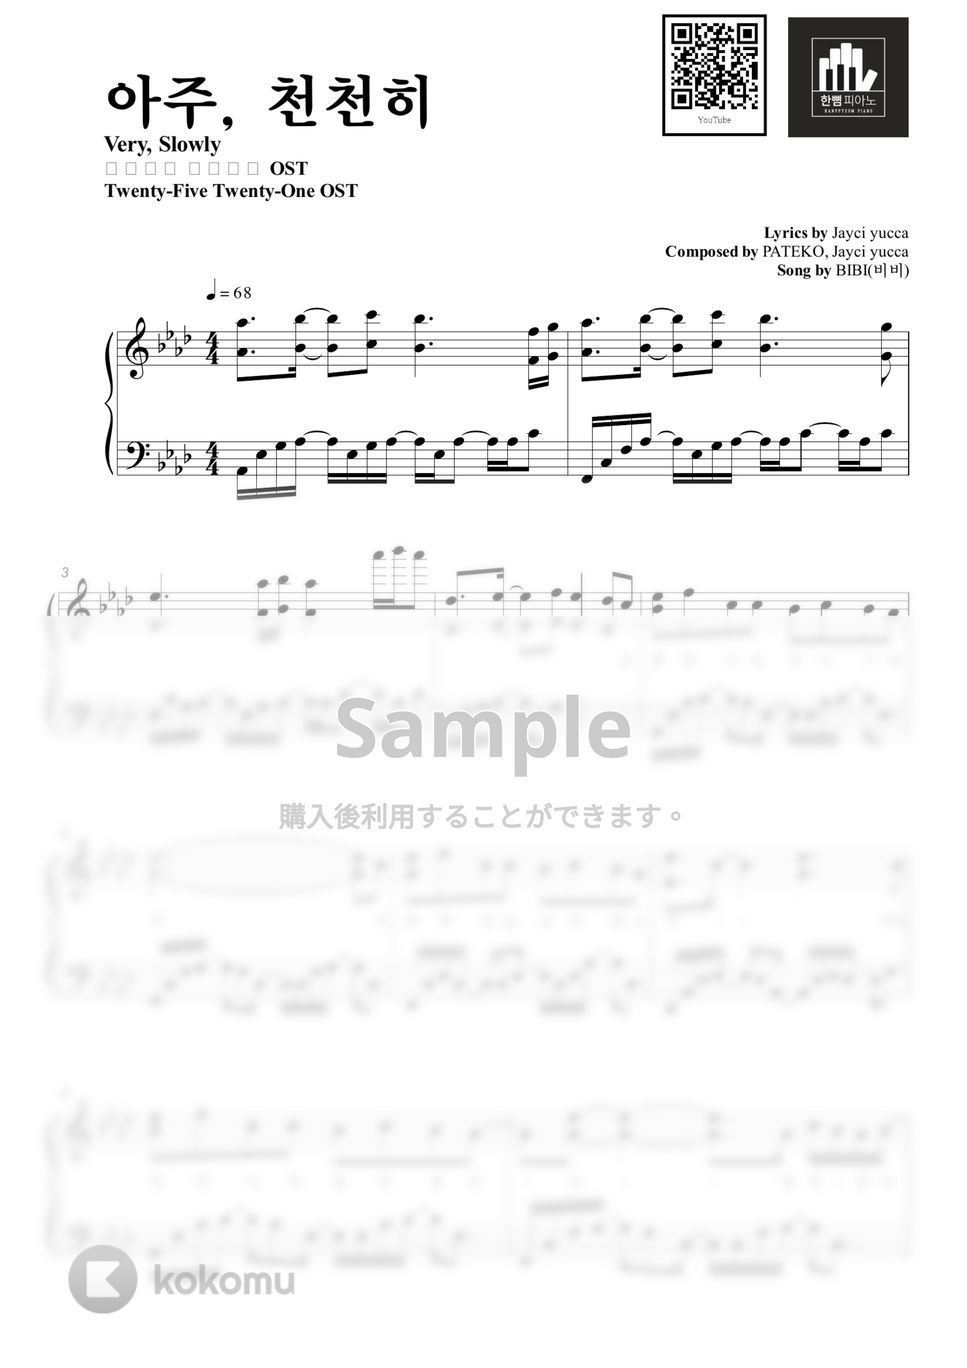 Twenty-Five Twenty-One - 아주, 천천히(Very, Slowly) (PIANO COVER) by HANPPYEOMPIANO